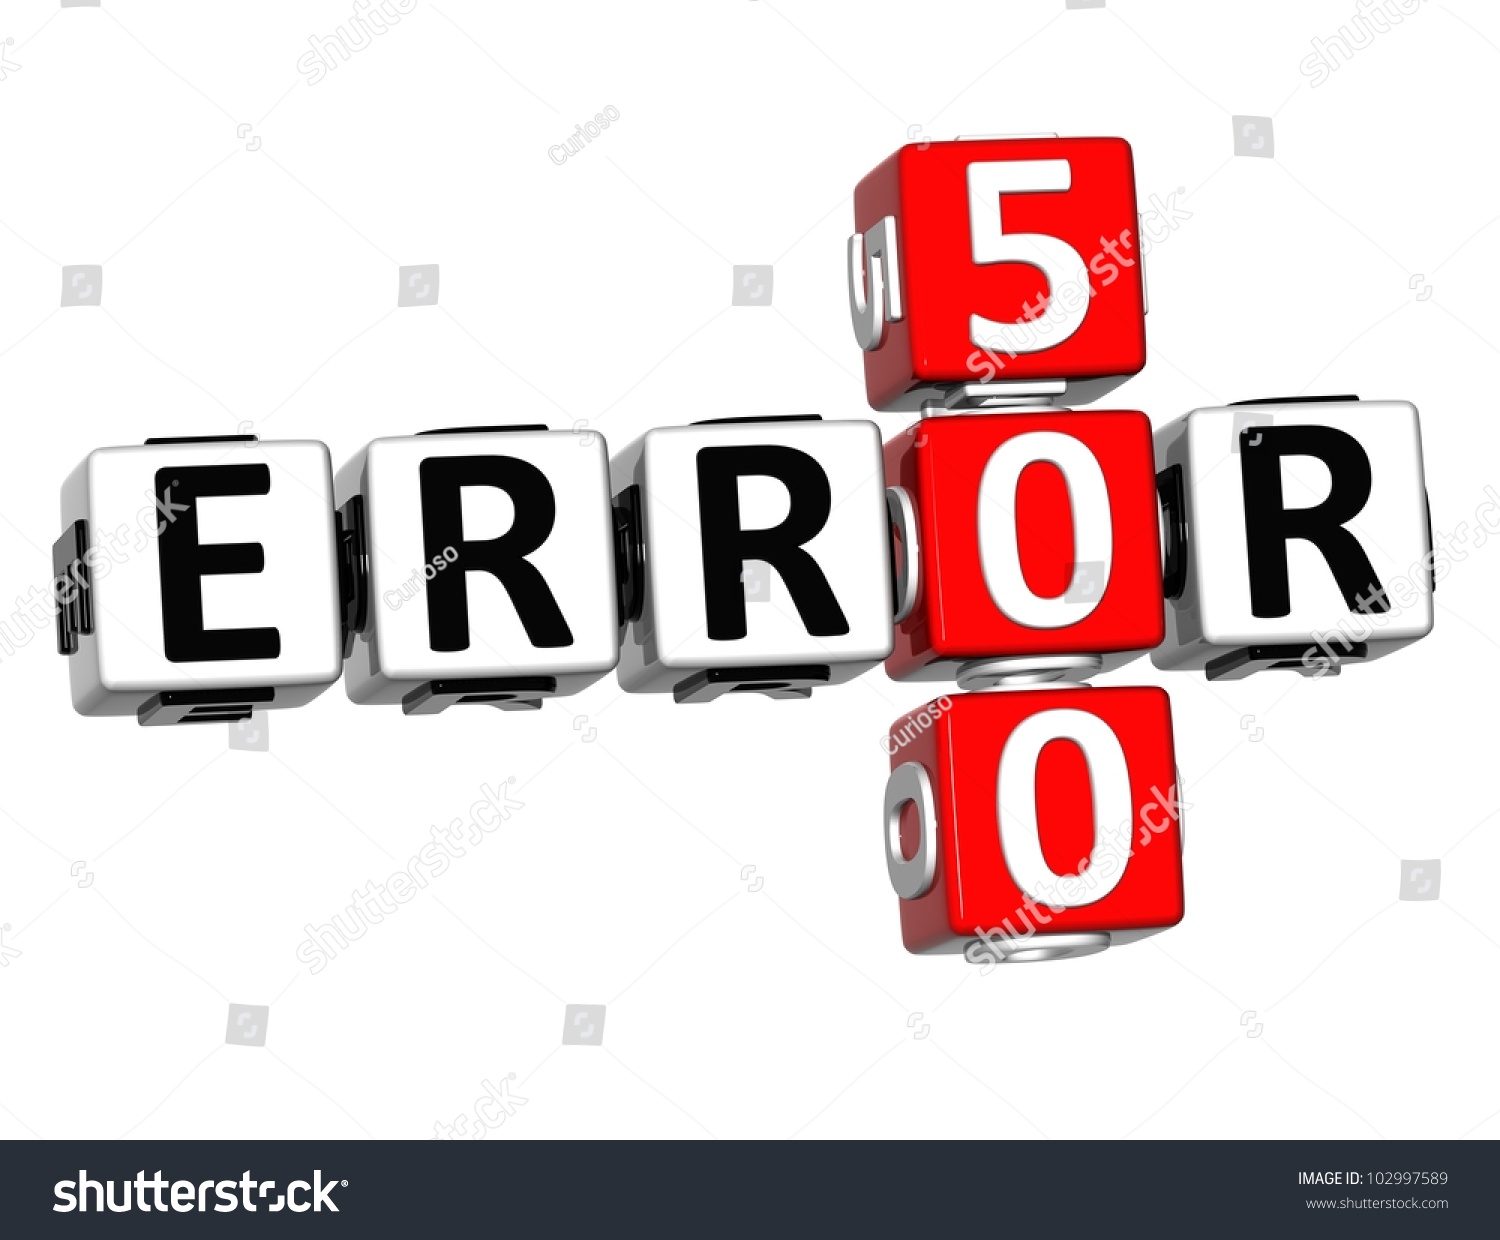 3d Error 500 Crossword On White Background Stock Photo 102997589